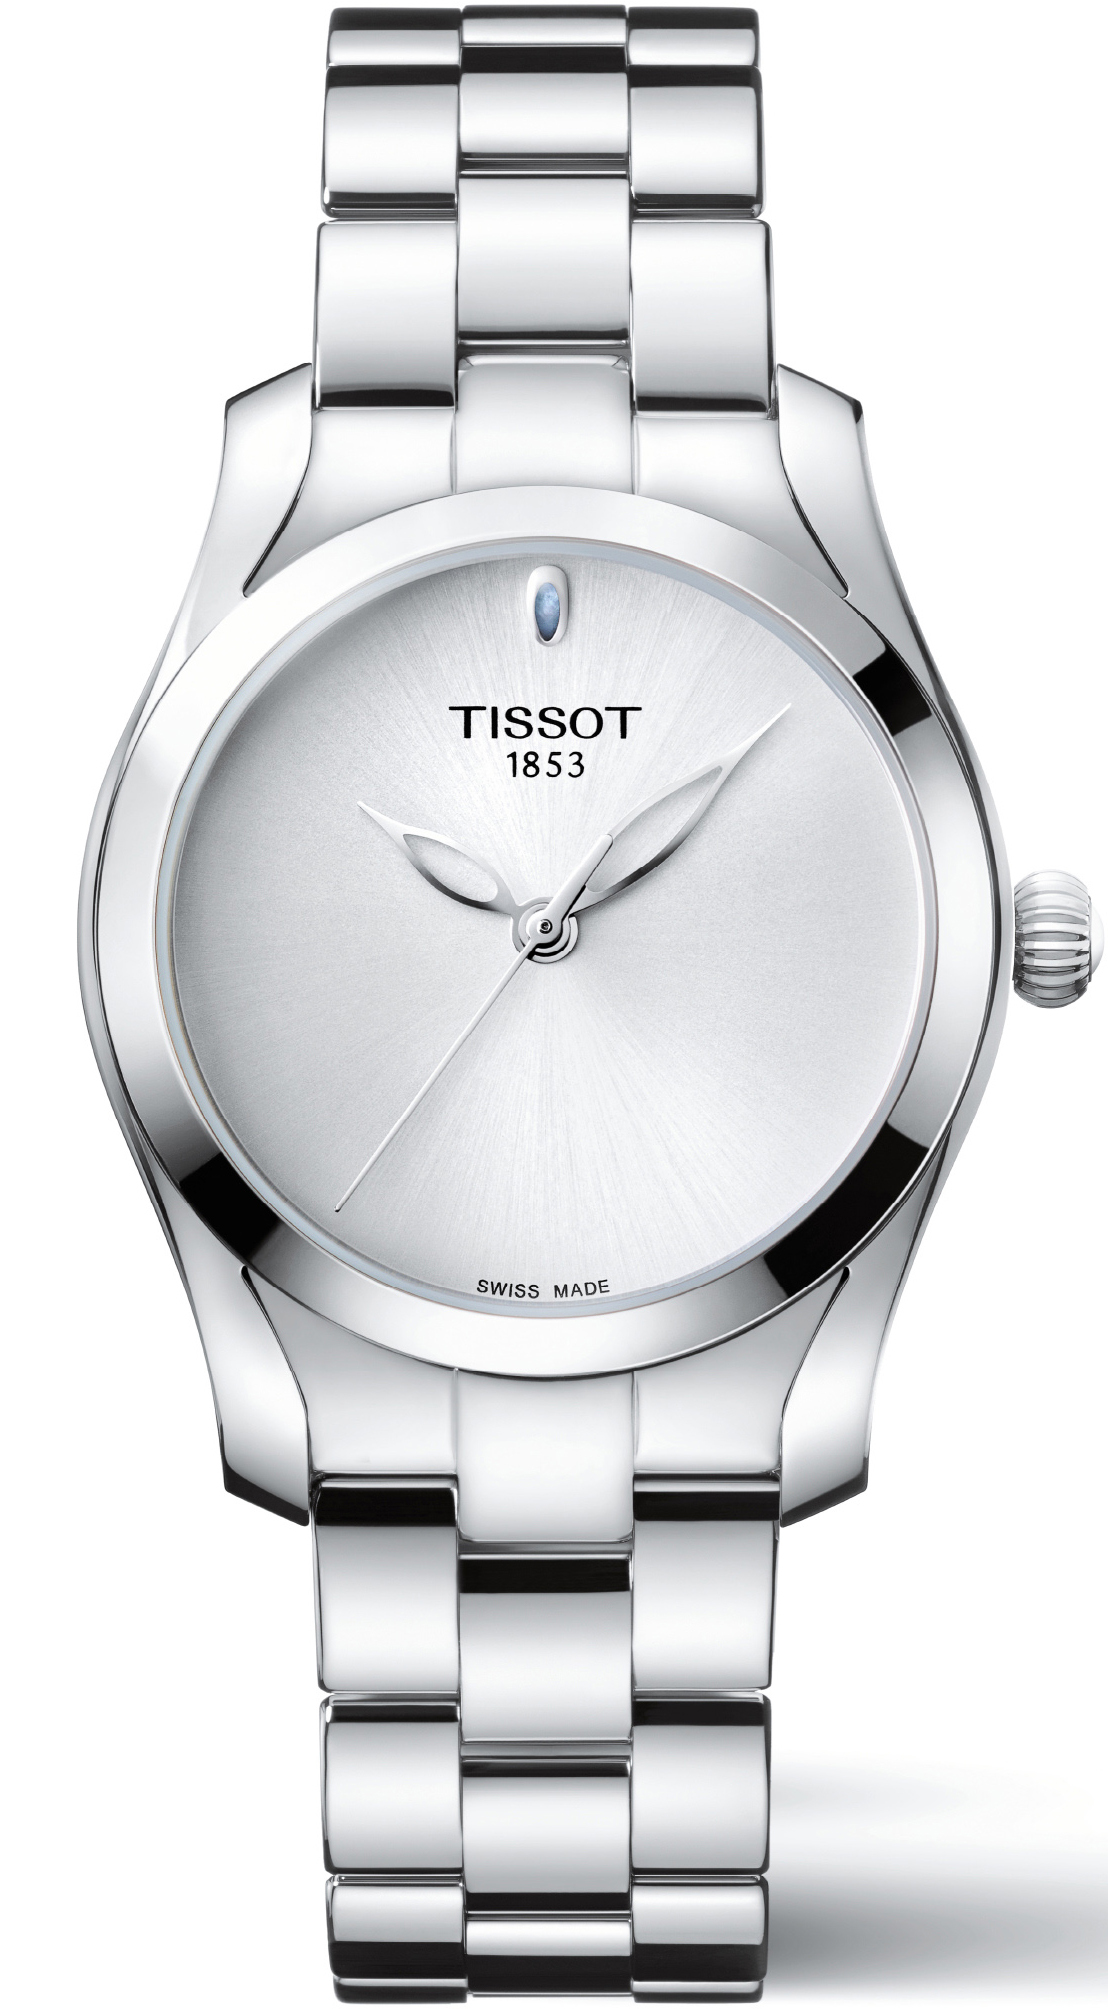 Đồng hồ nữ Tissot T112.210.11.031.00